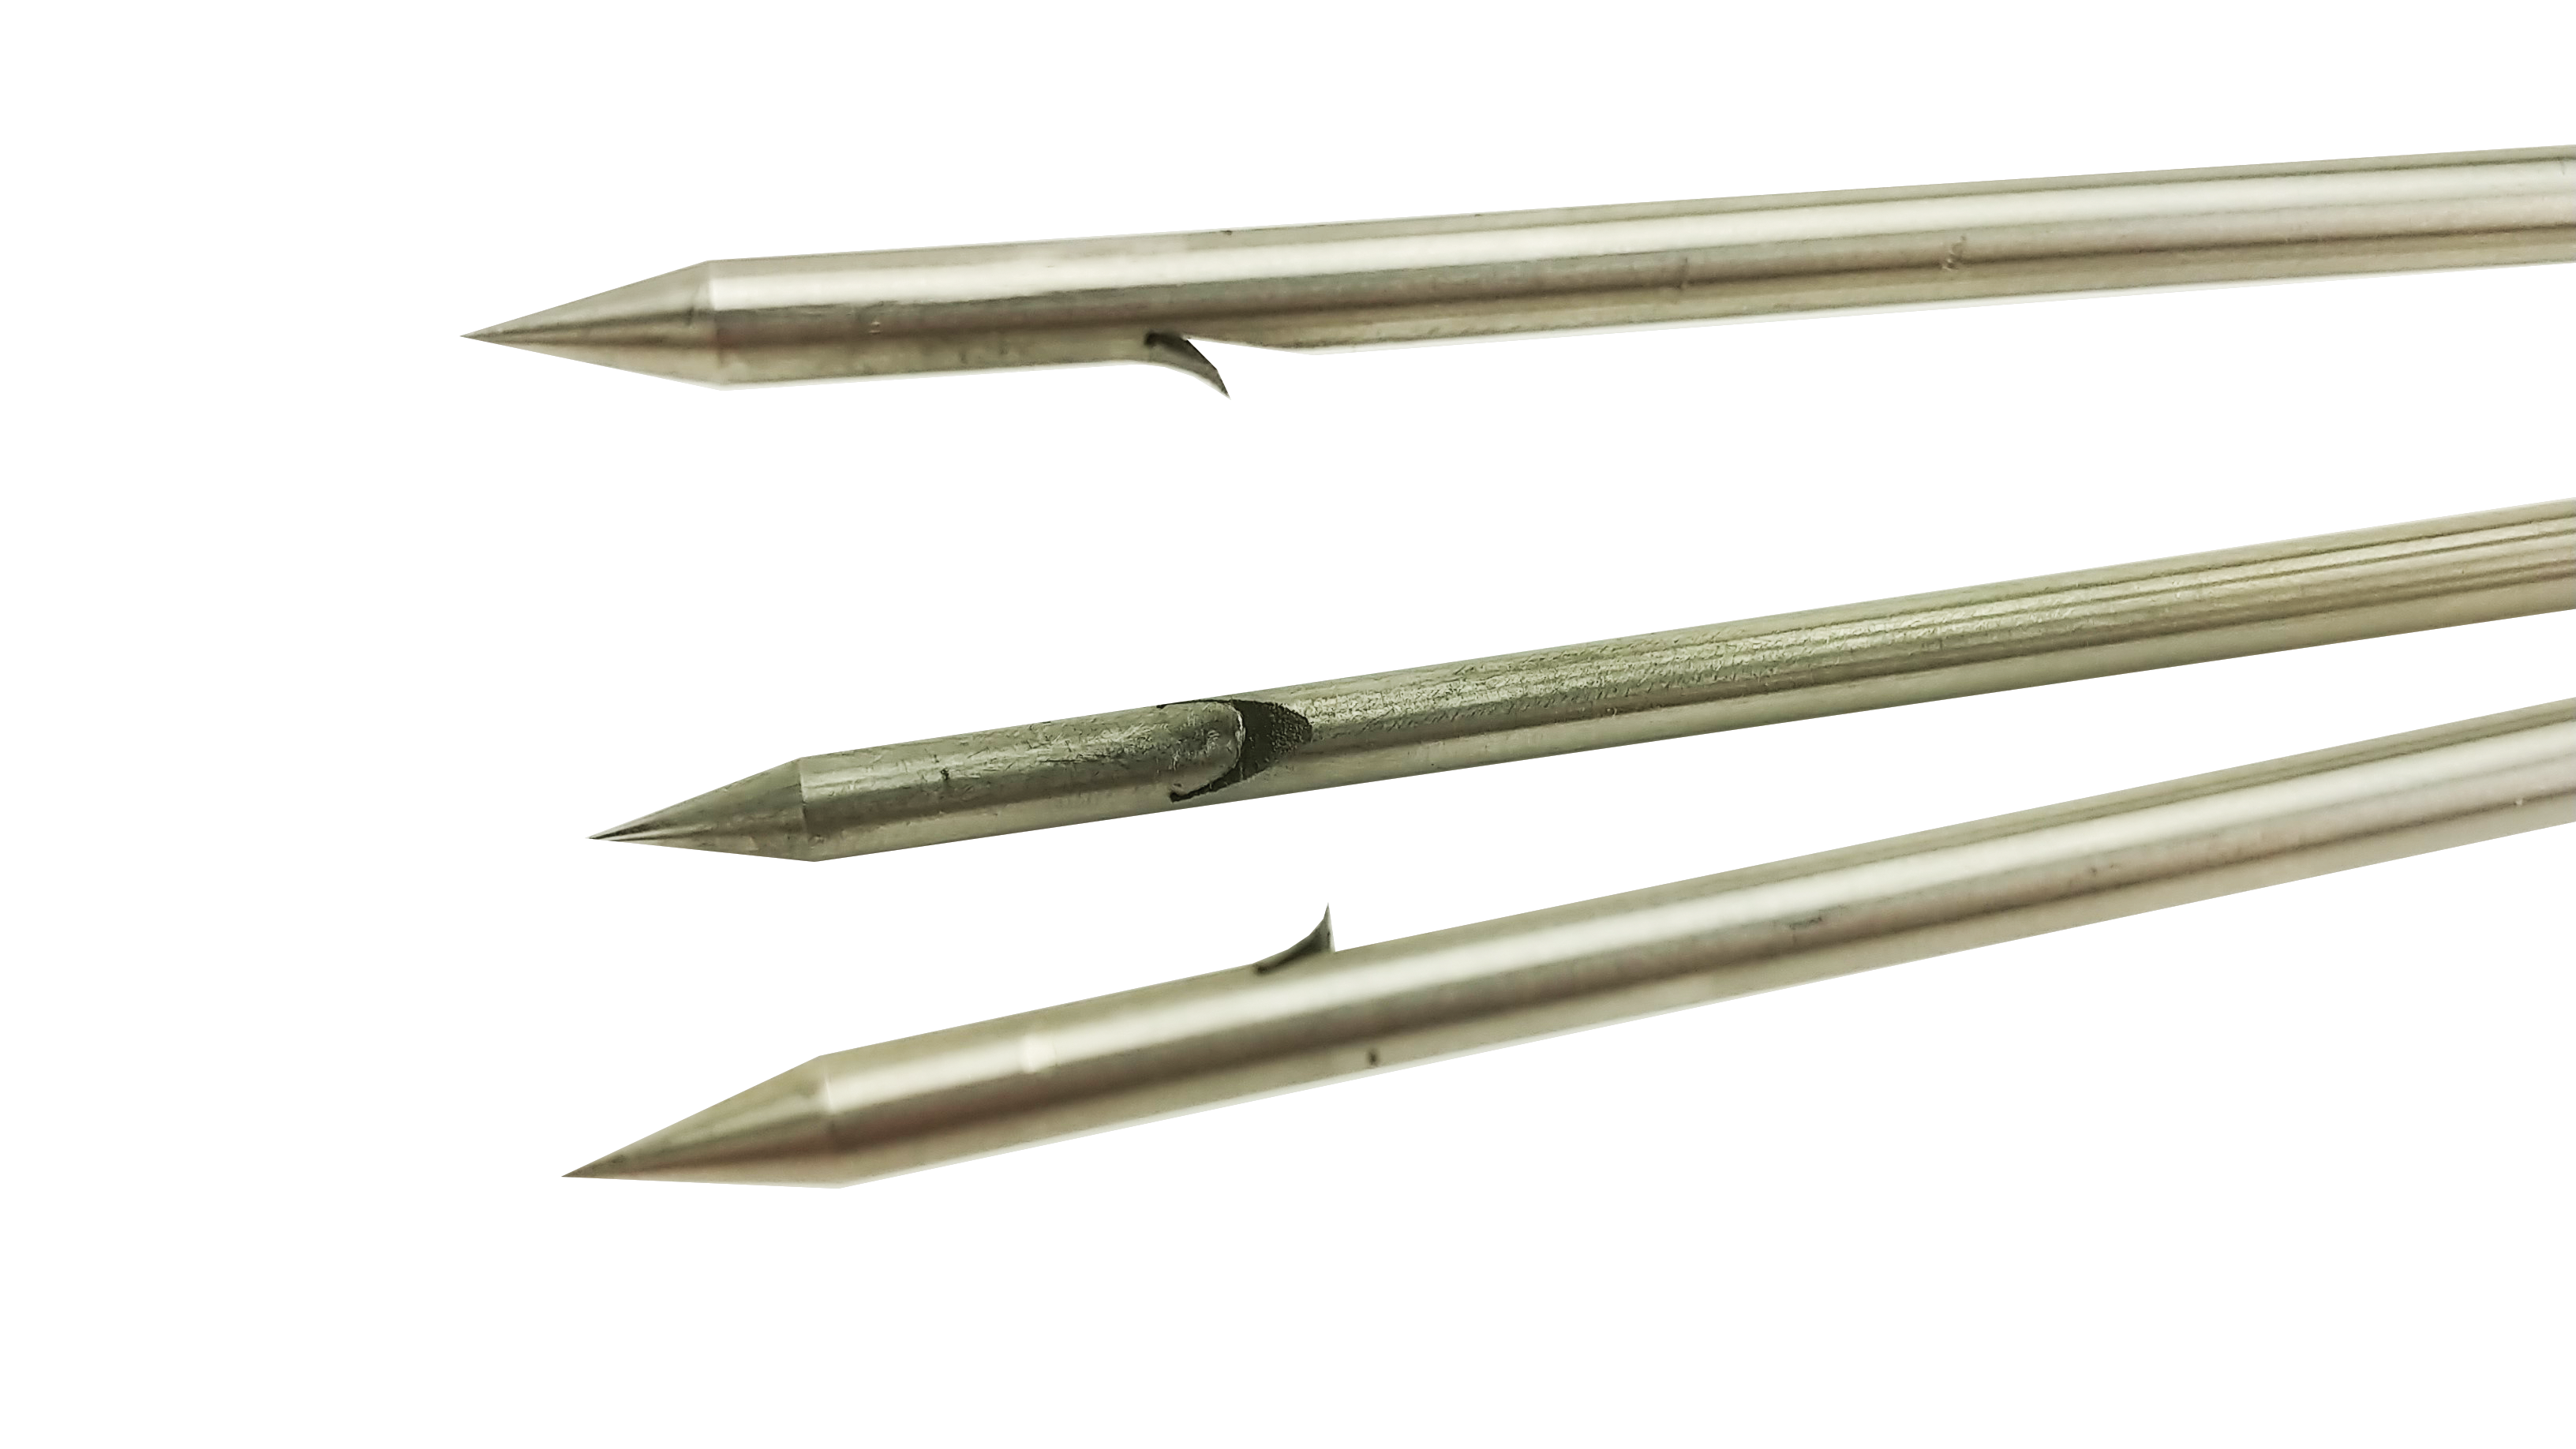 Drophog Lancer 36 Inch Fiberglass Polespear W/11 In Paralyzer Tip & 18" Latex Band